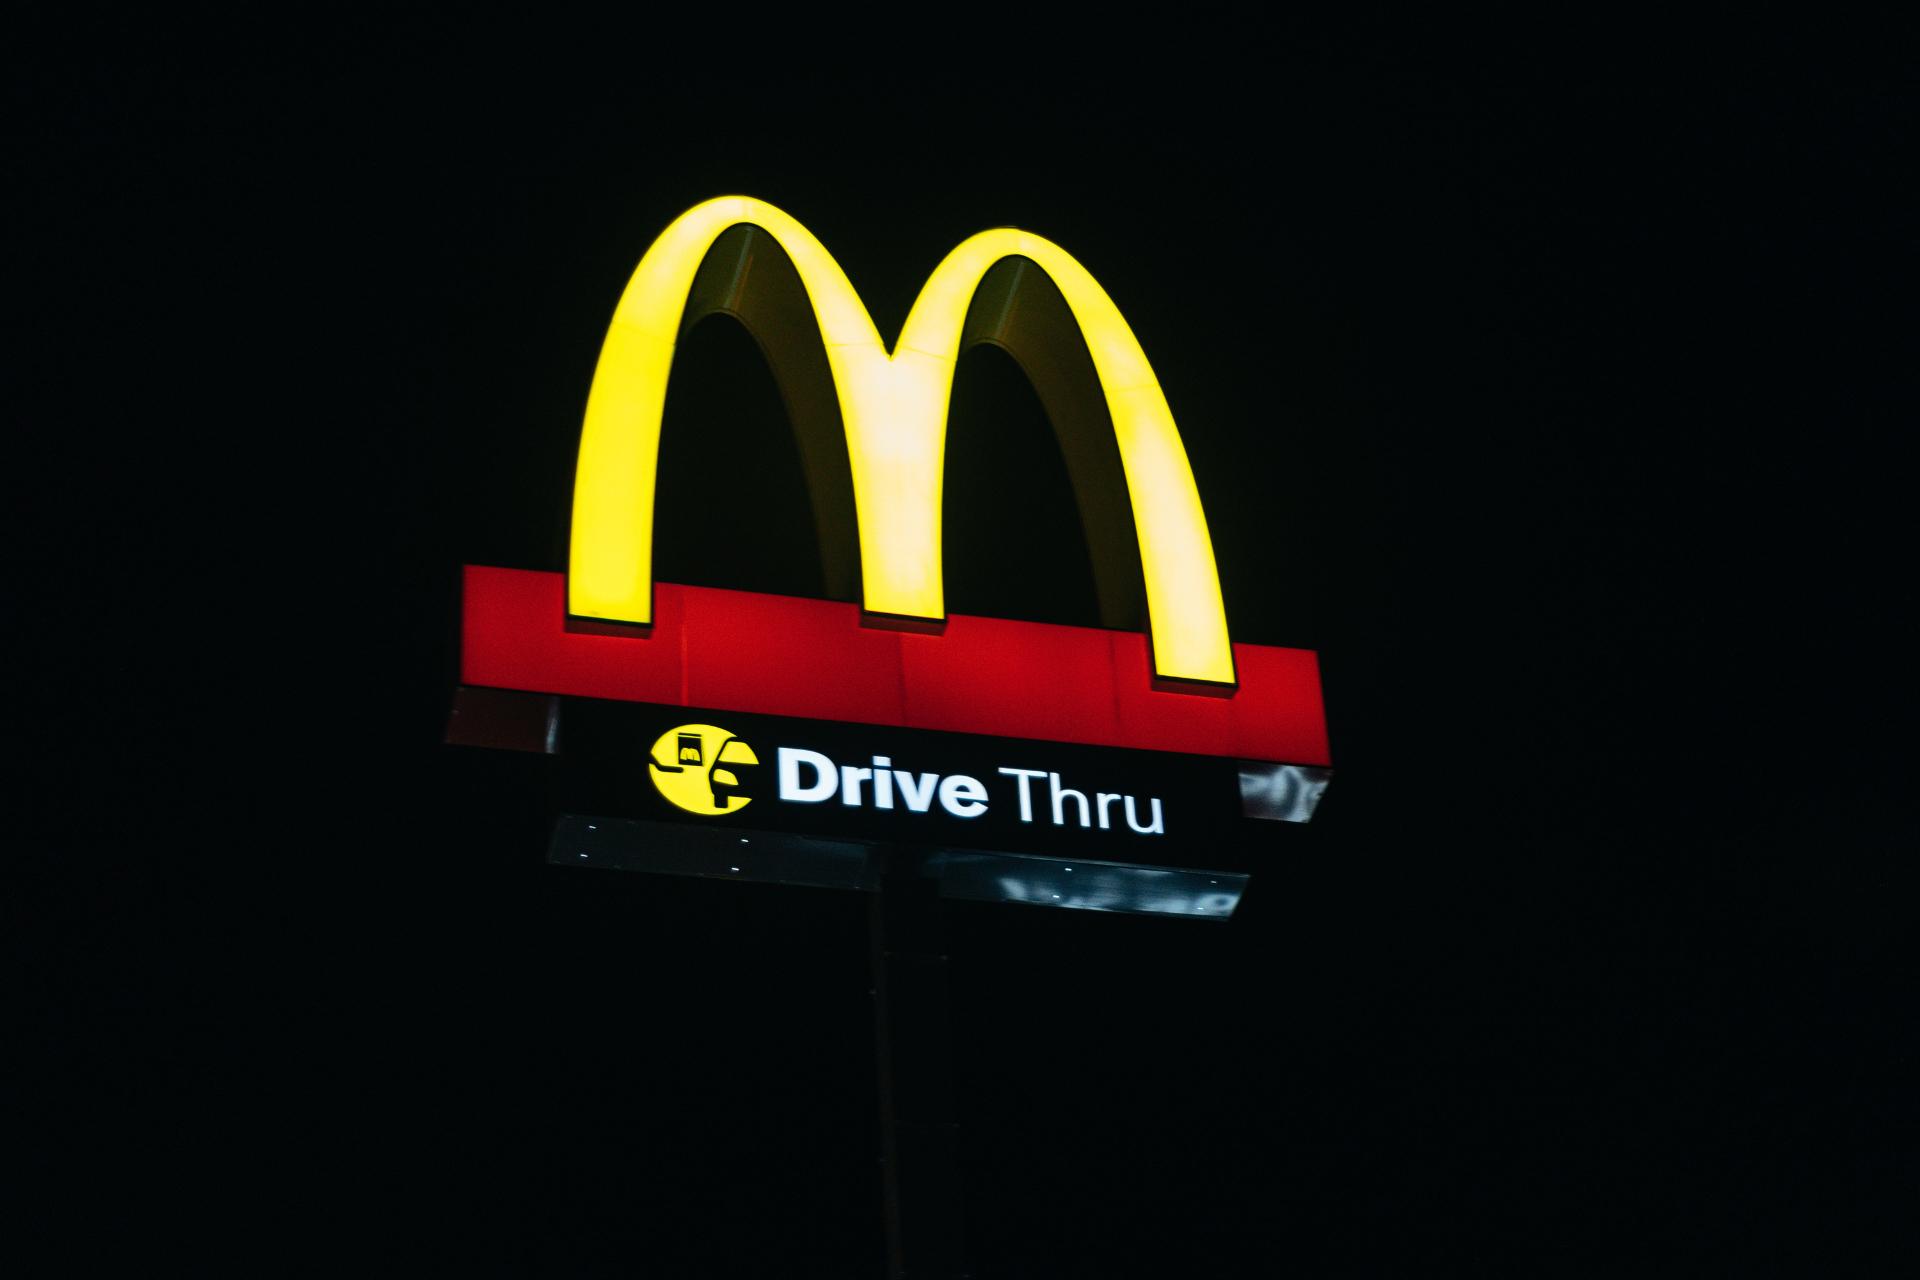 McDonald's drive thru